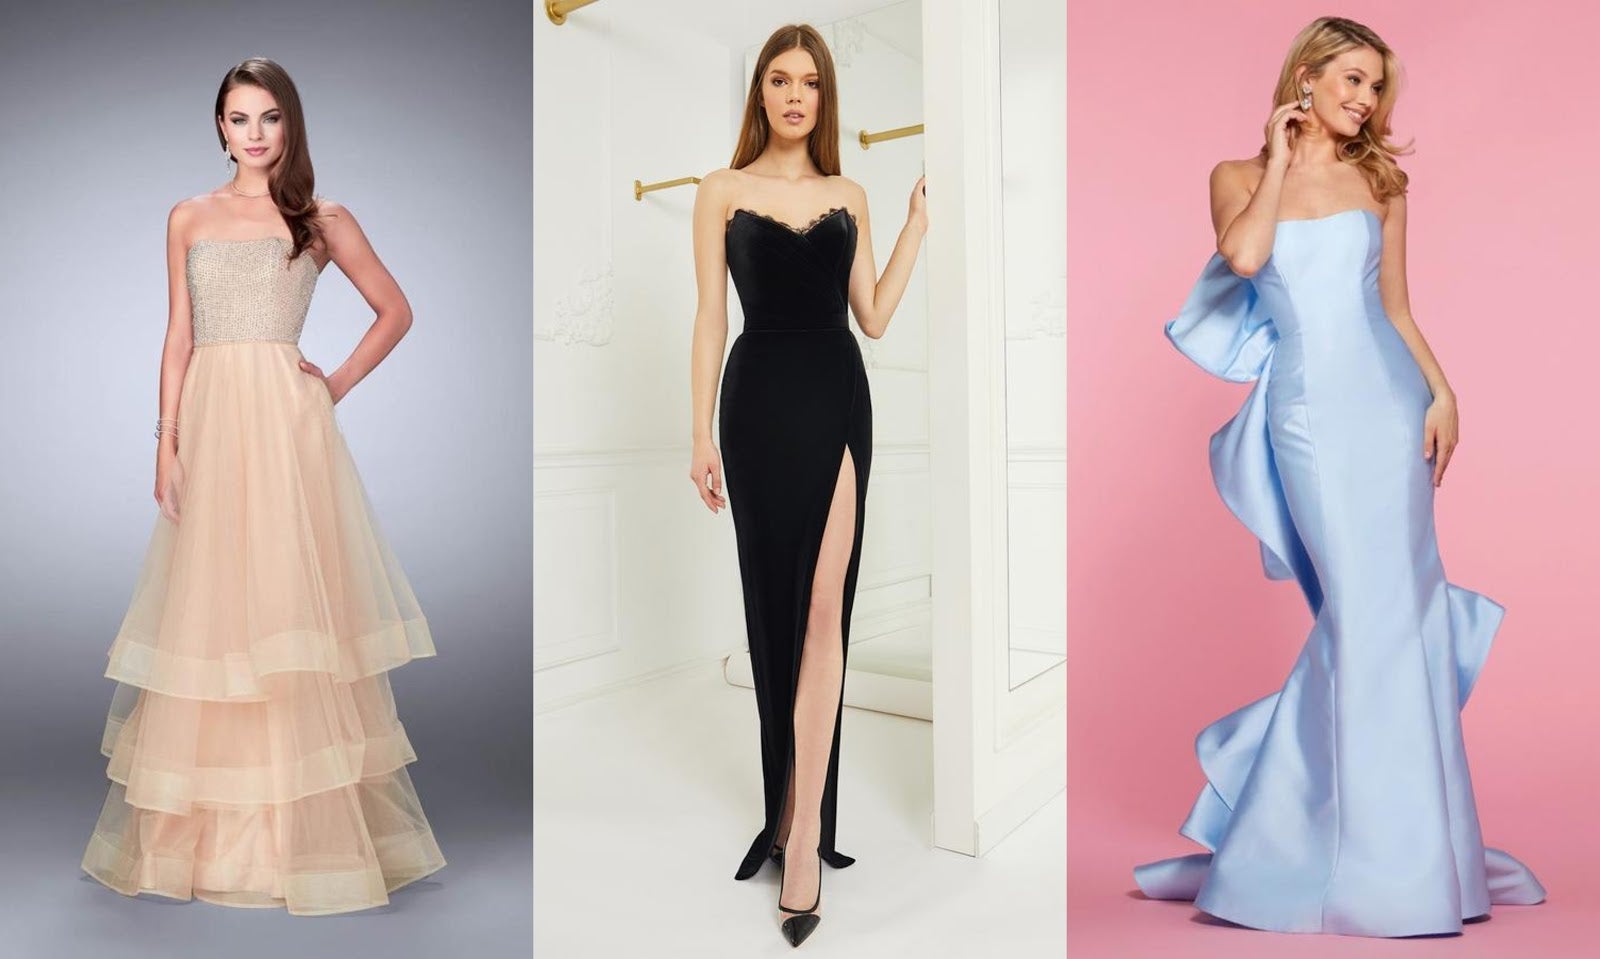 dress designers for prom